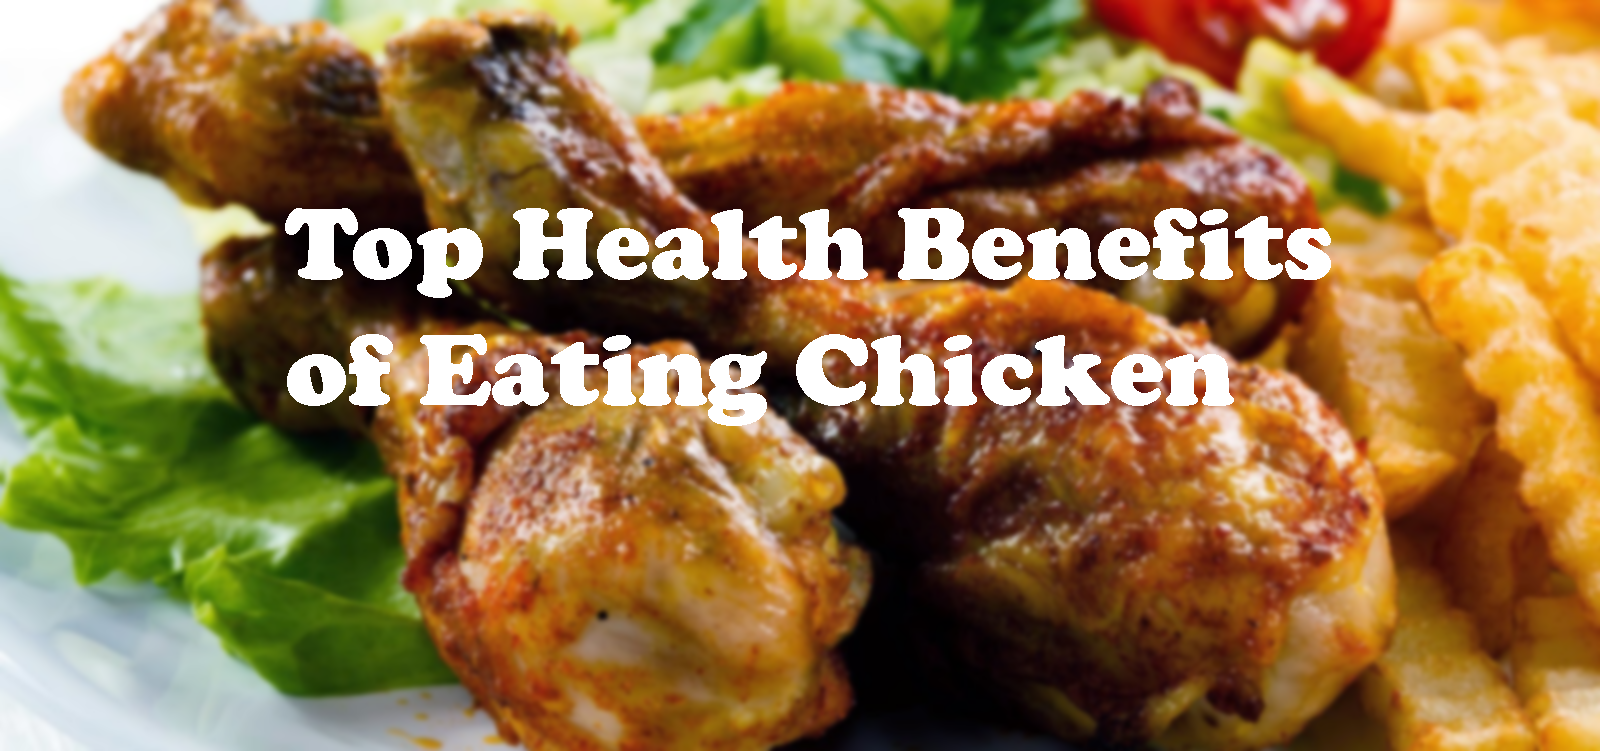 Top-Health-Benefits-of-Eating-Chicken